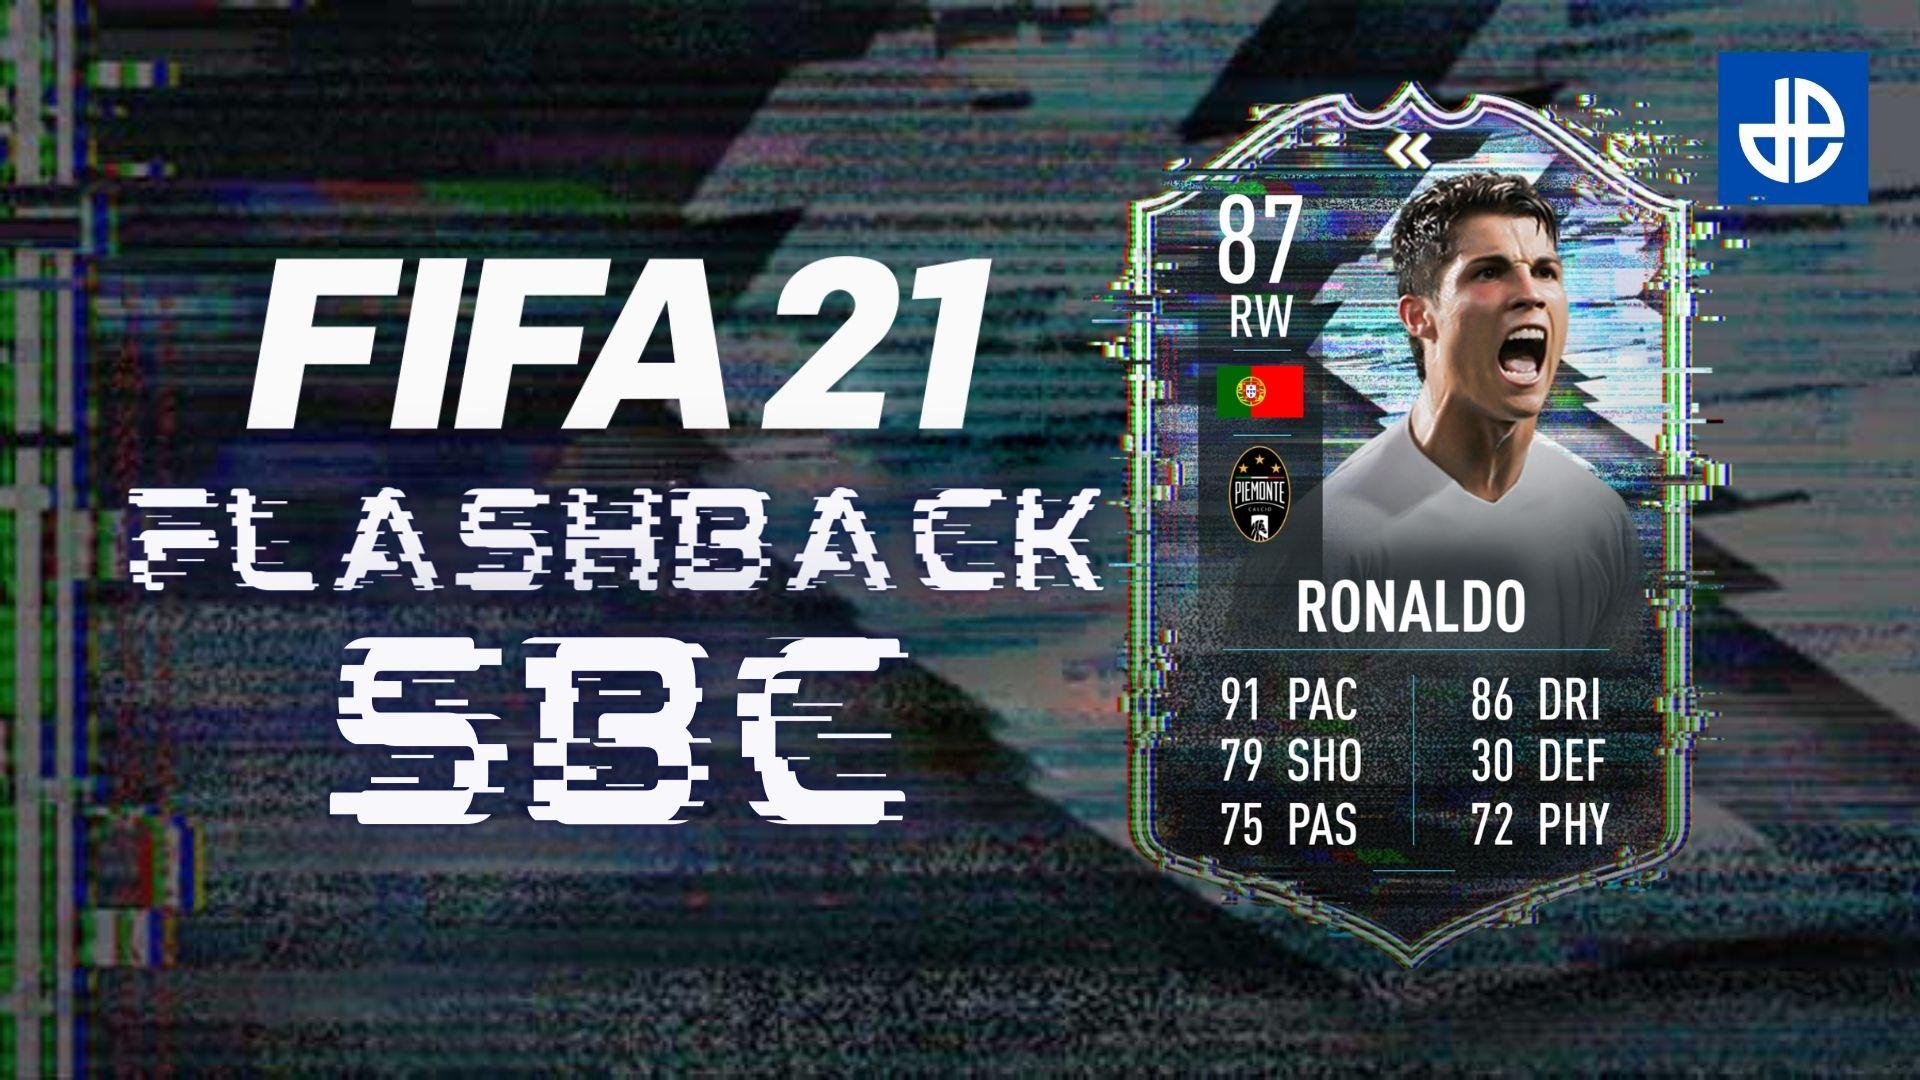 Cristiano Ronaldo Flashback SBC card